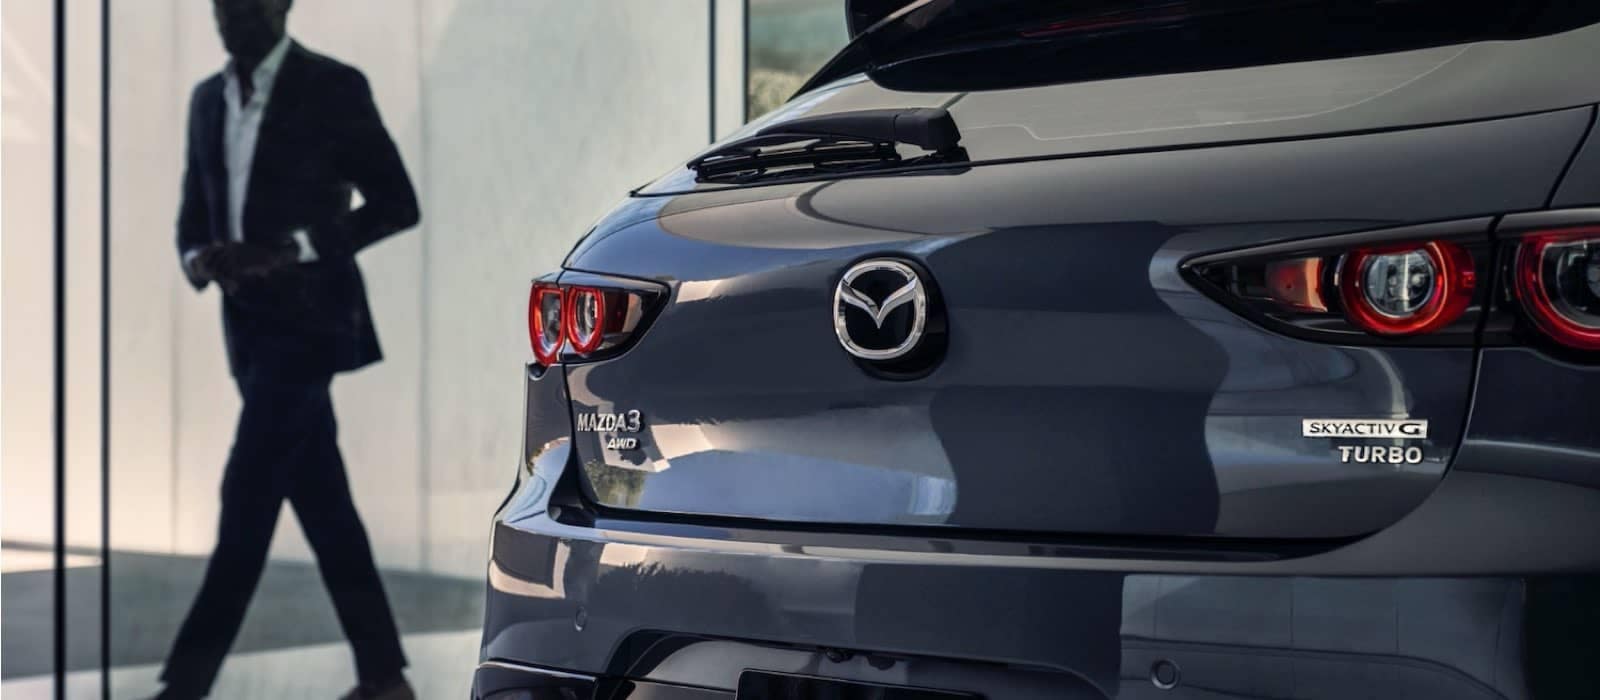 2021 Mazda3 Hatchback Turbo_mobile